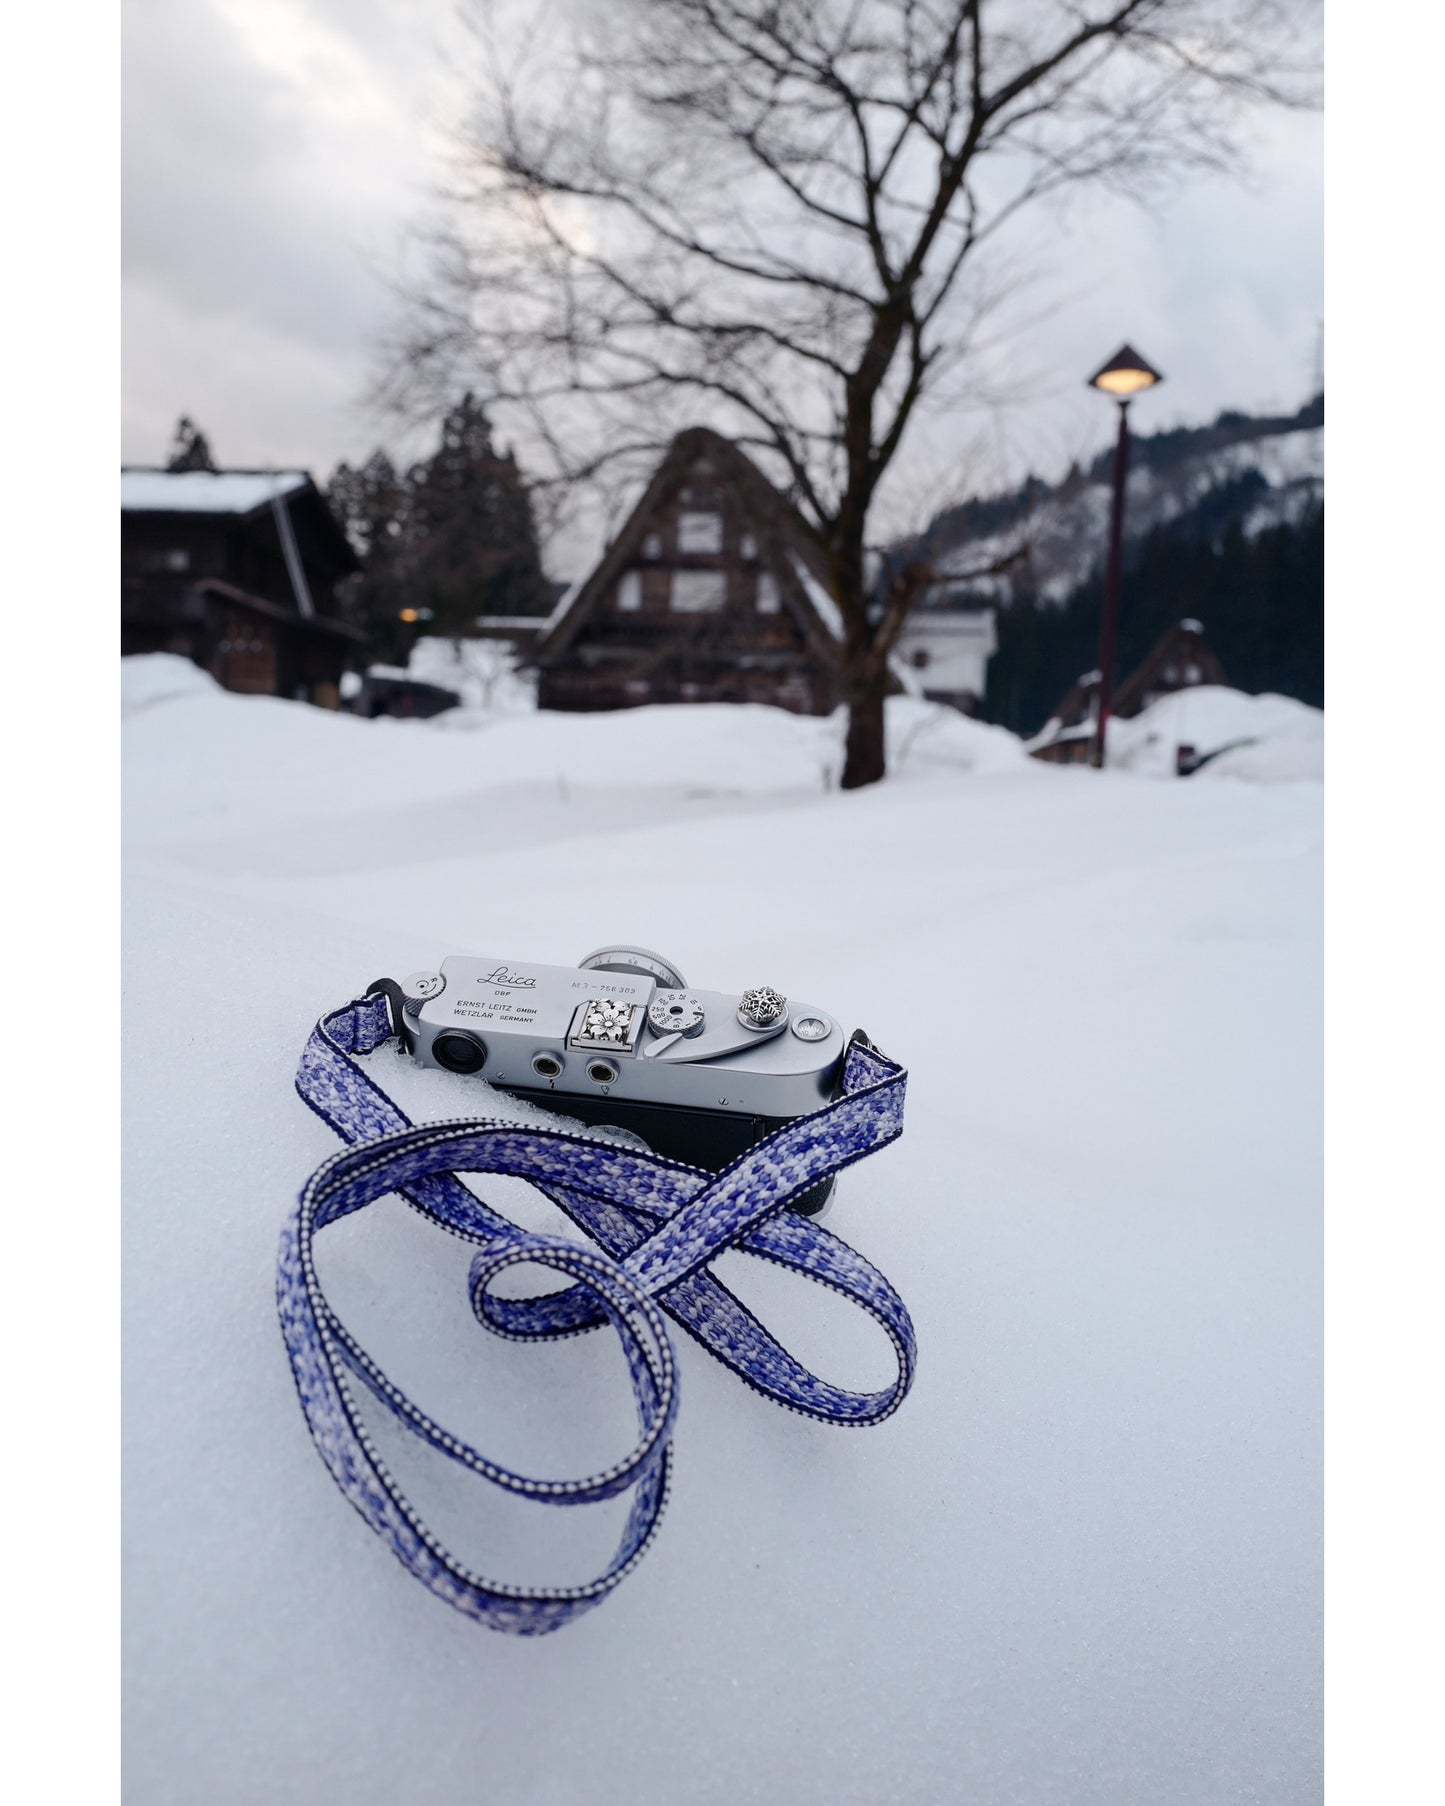 [Made-to-order] Sunny and Snowy Camera Strap / Hand braiding Silk Kumihimo